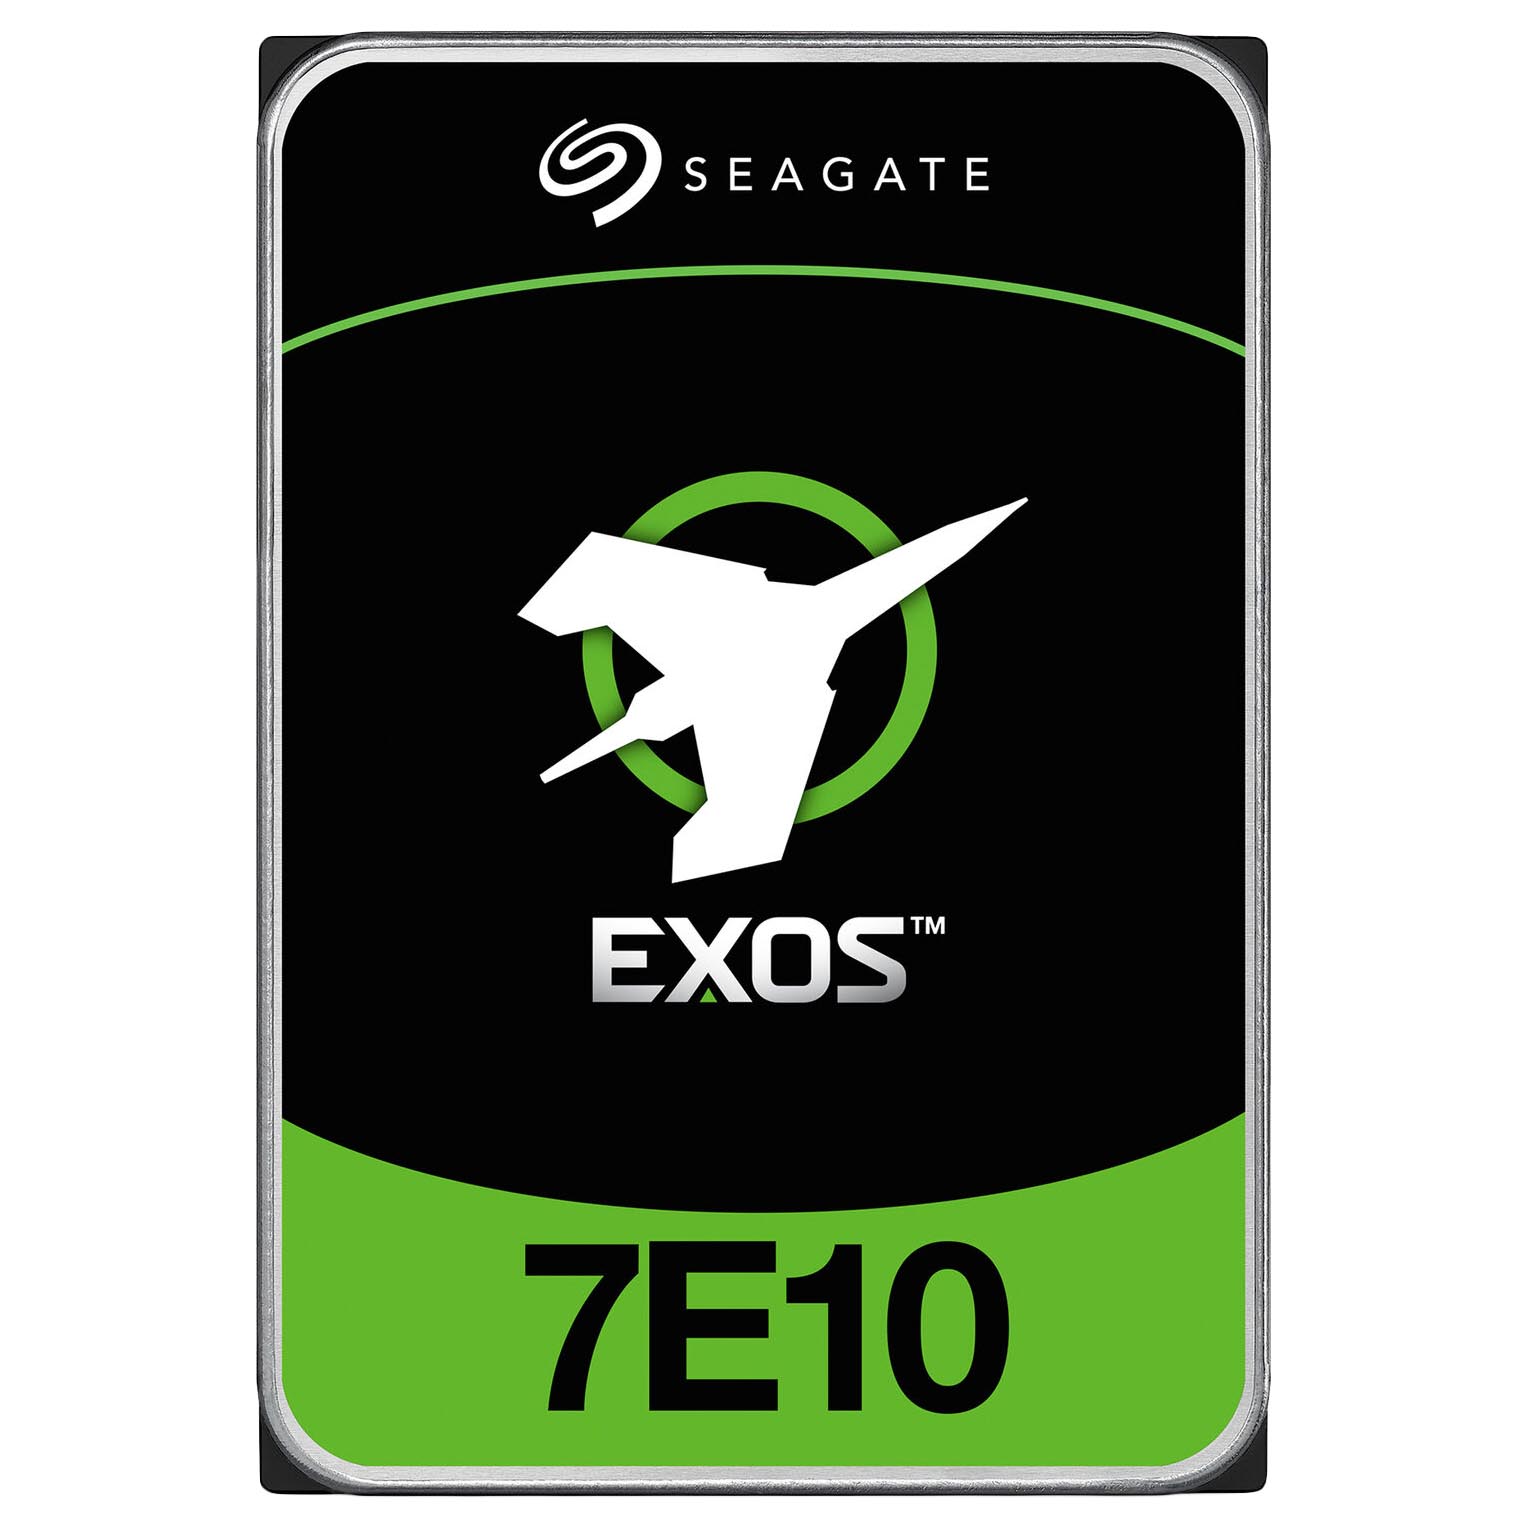 Внутренний жесткий диск Seagate Exos 7E10, ST2000NM001B, 2 Тб жесткий диск seagate exos 7e10 10 тб st10000nm018b